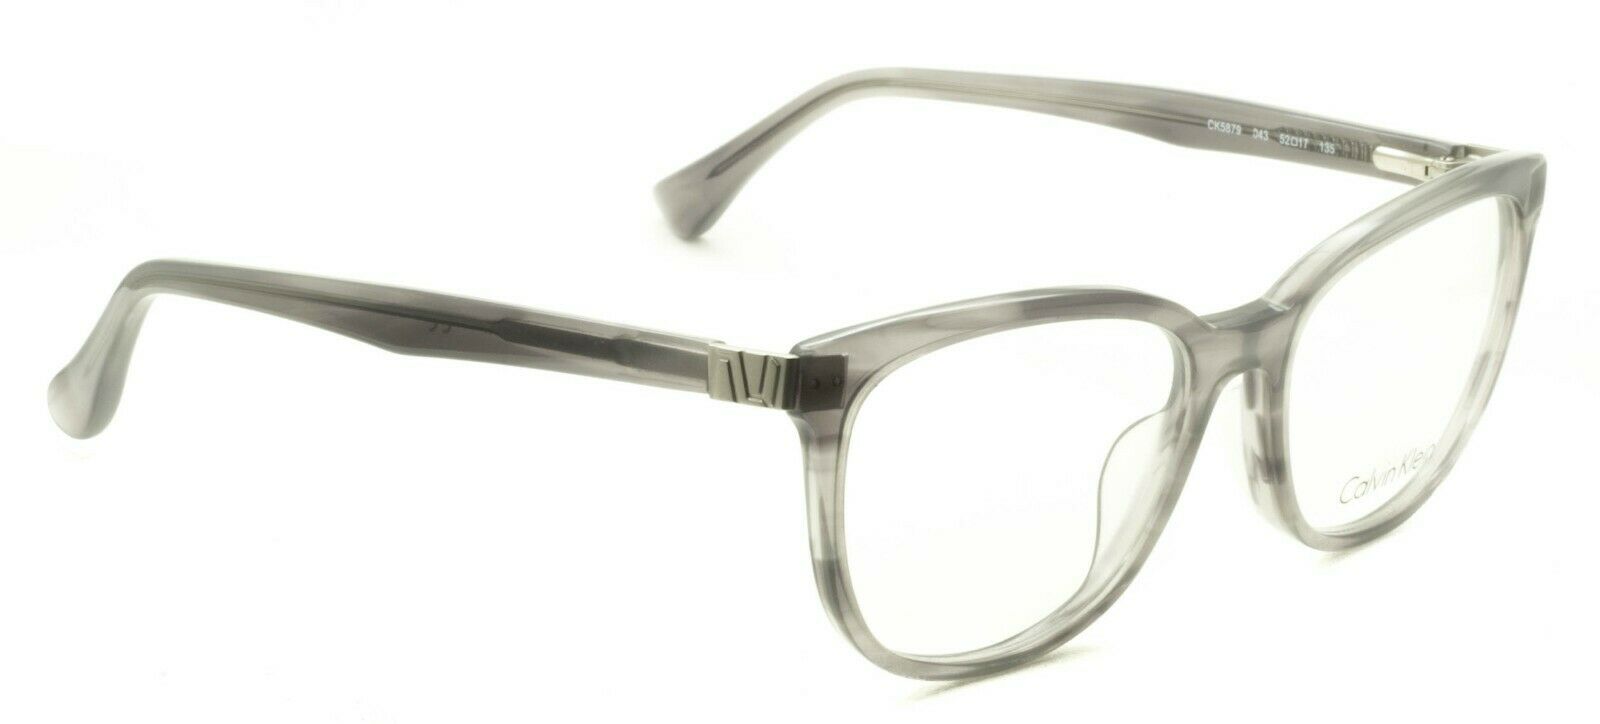 CALVIN KLEIN CK 5879 043 52mm Eyewear RX Optical FRAMES Eyeglasses Glasses - New